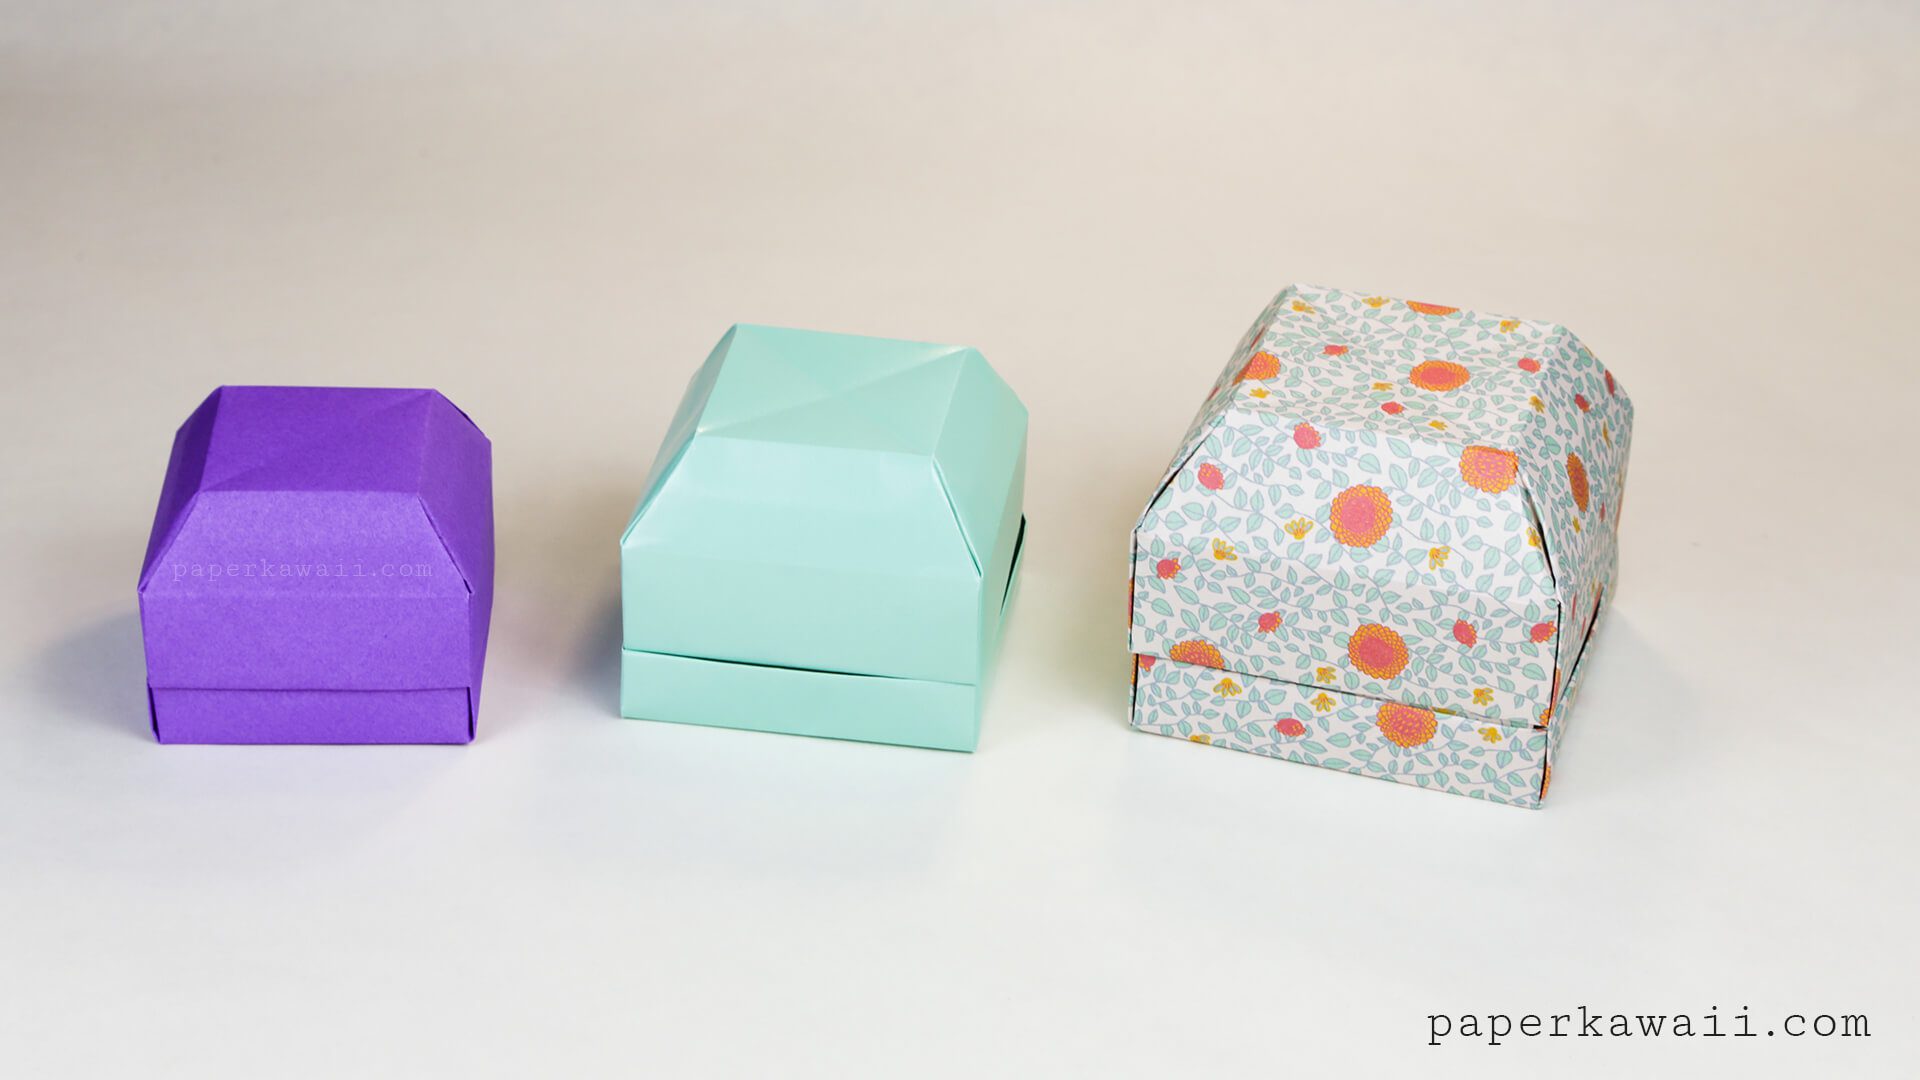 Origami Gem Gift Box Tutorial - pretty as a ring box!